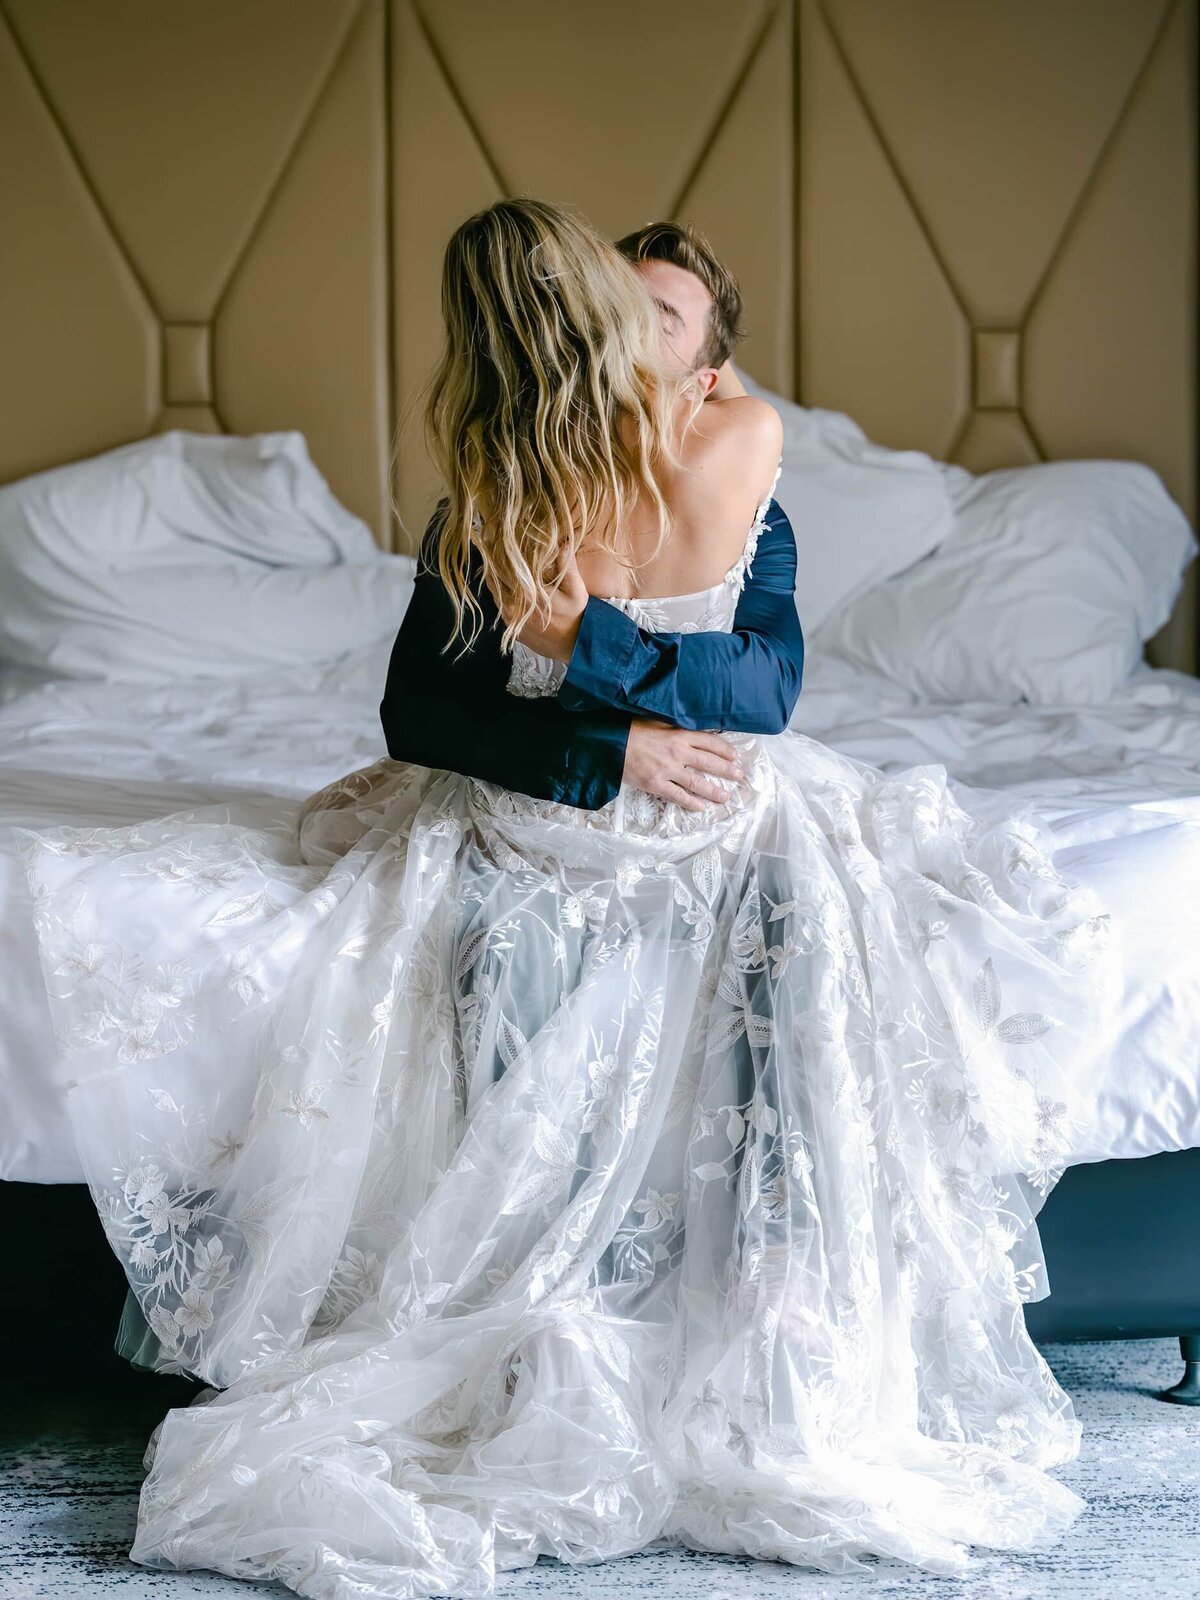 Couple boudoir photoshoot - Serenity Photography 129